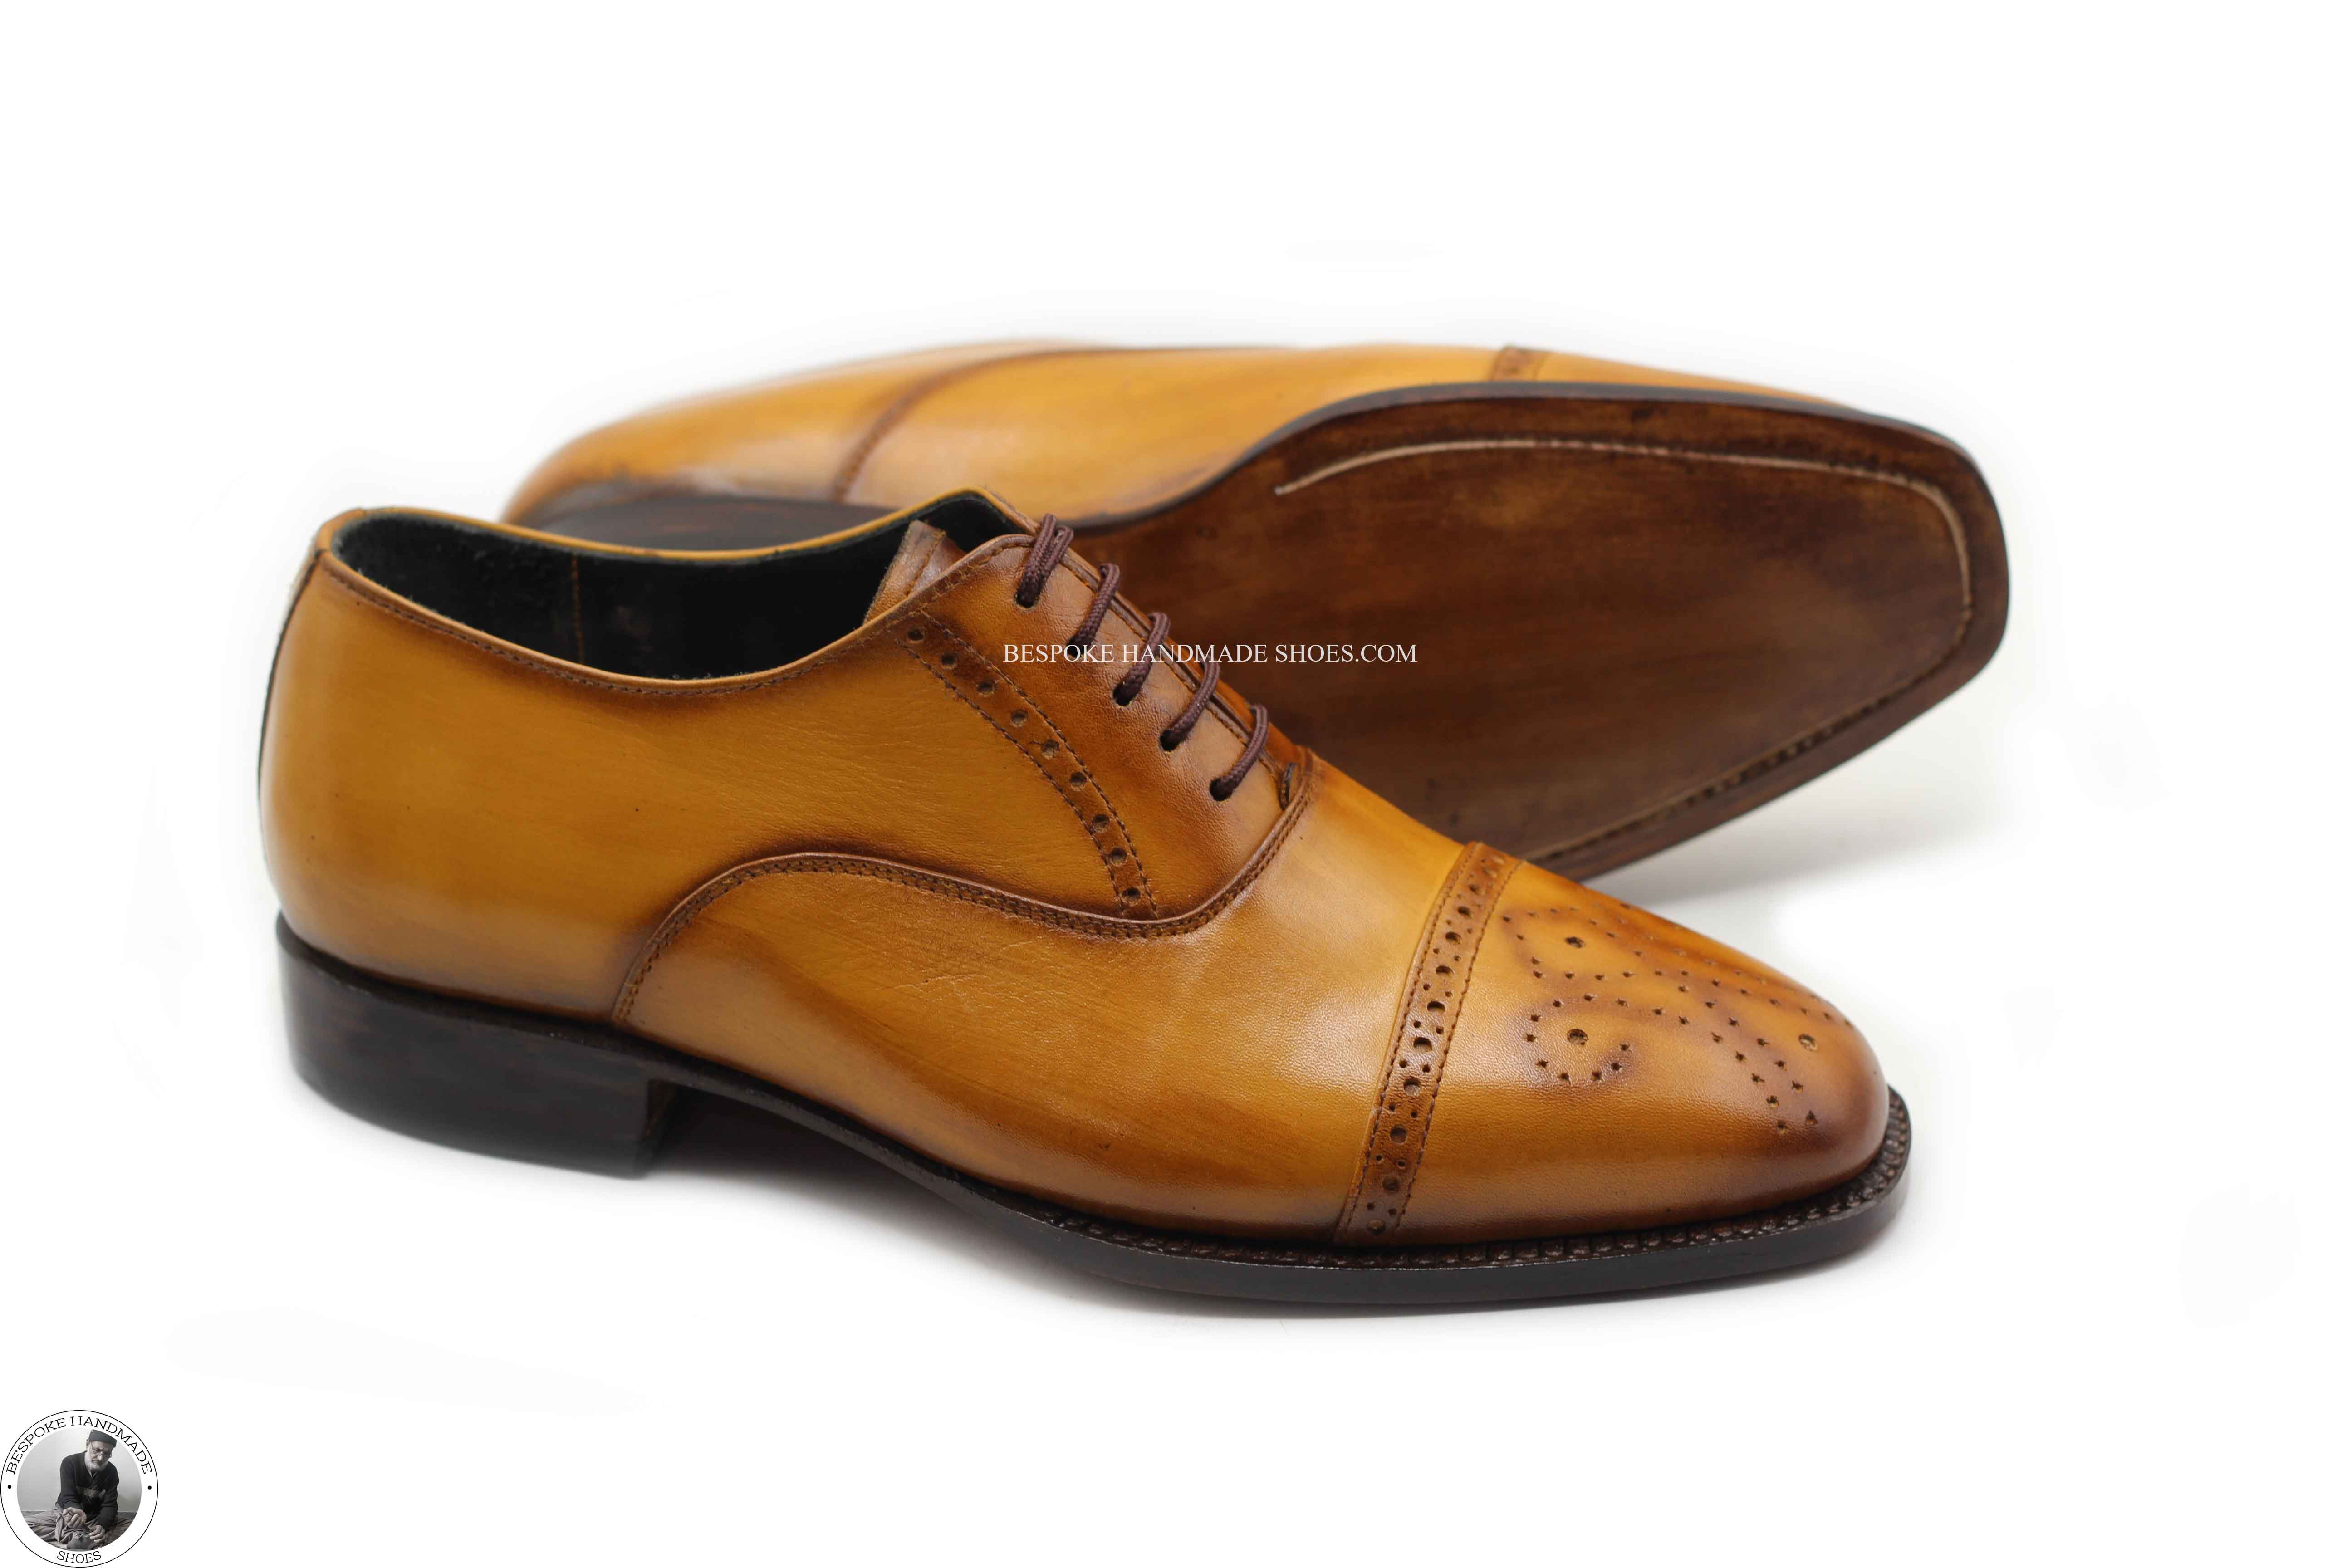 Bespoke Men's Handmade Tan Leather Oxford Toe Cap Brogue Dress Shoes For Men's